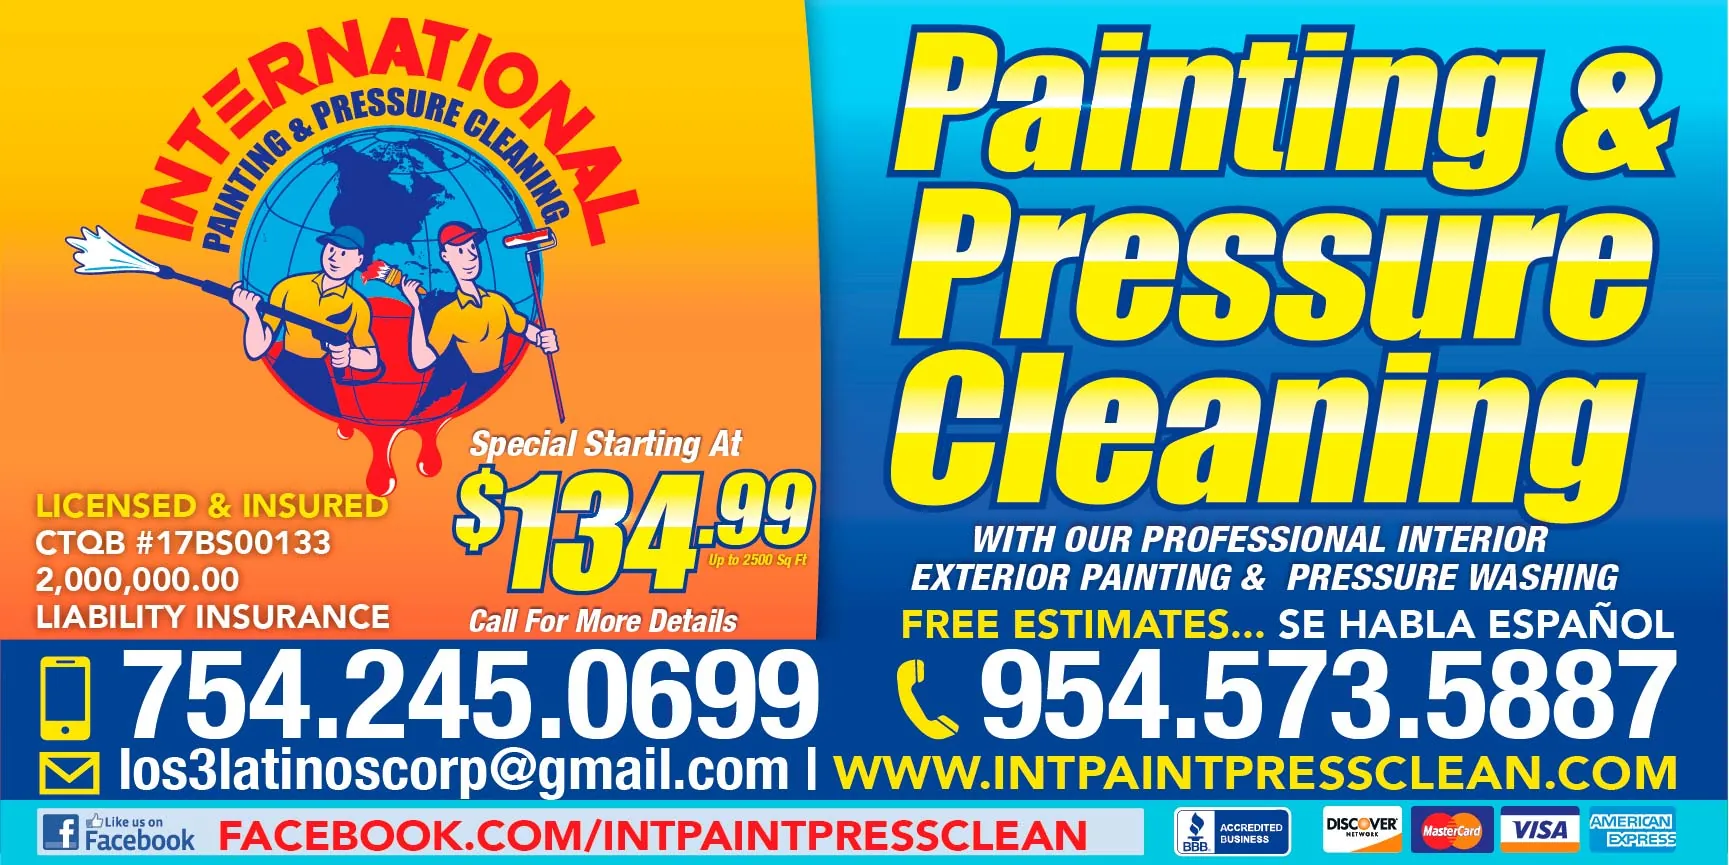 International Painting & Pressure Cleaning